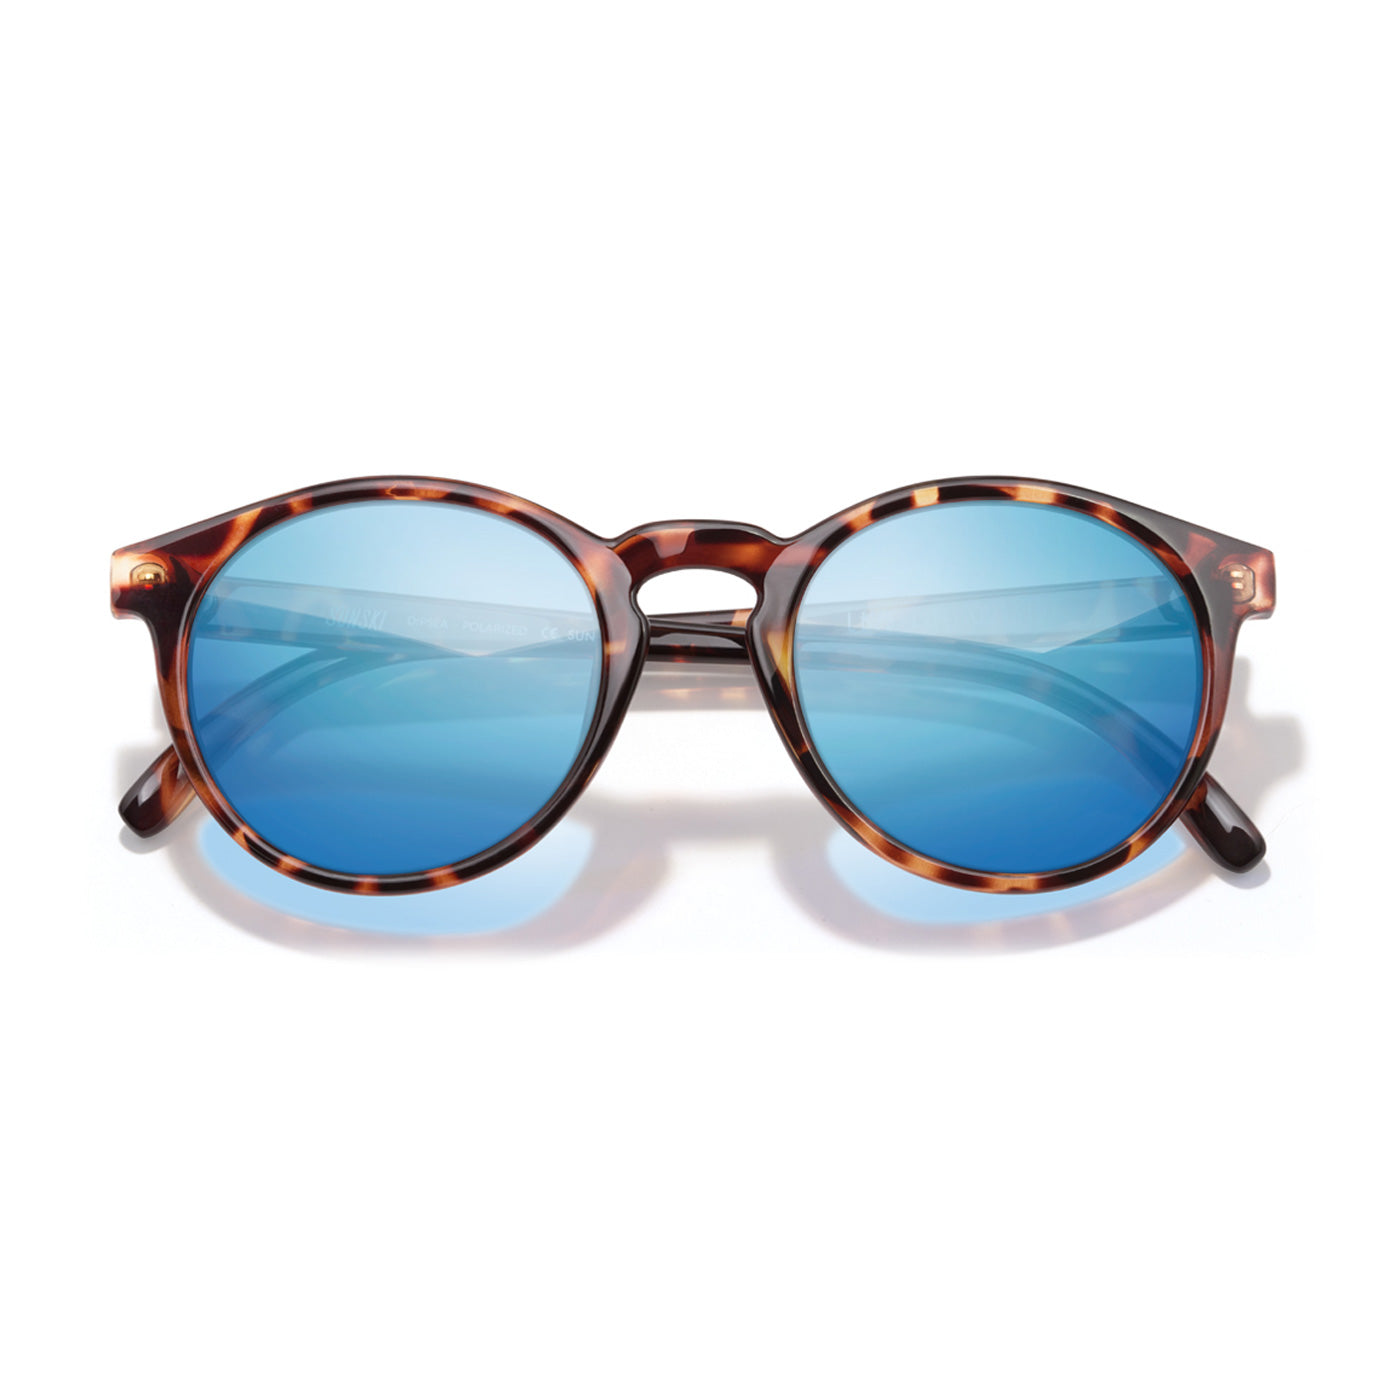 Tortoise Dipsea with blue lenses sunglasses by Sunski